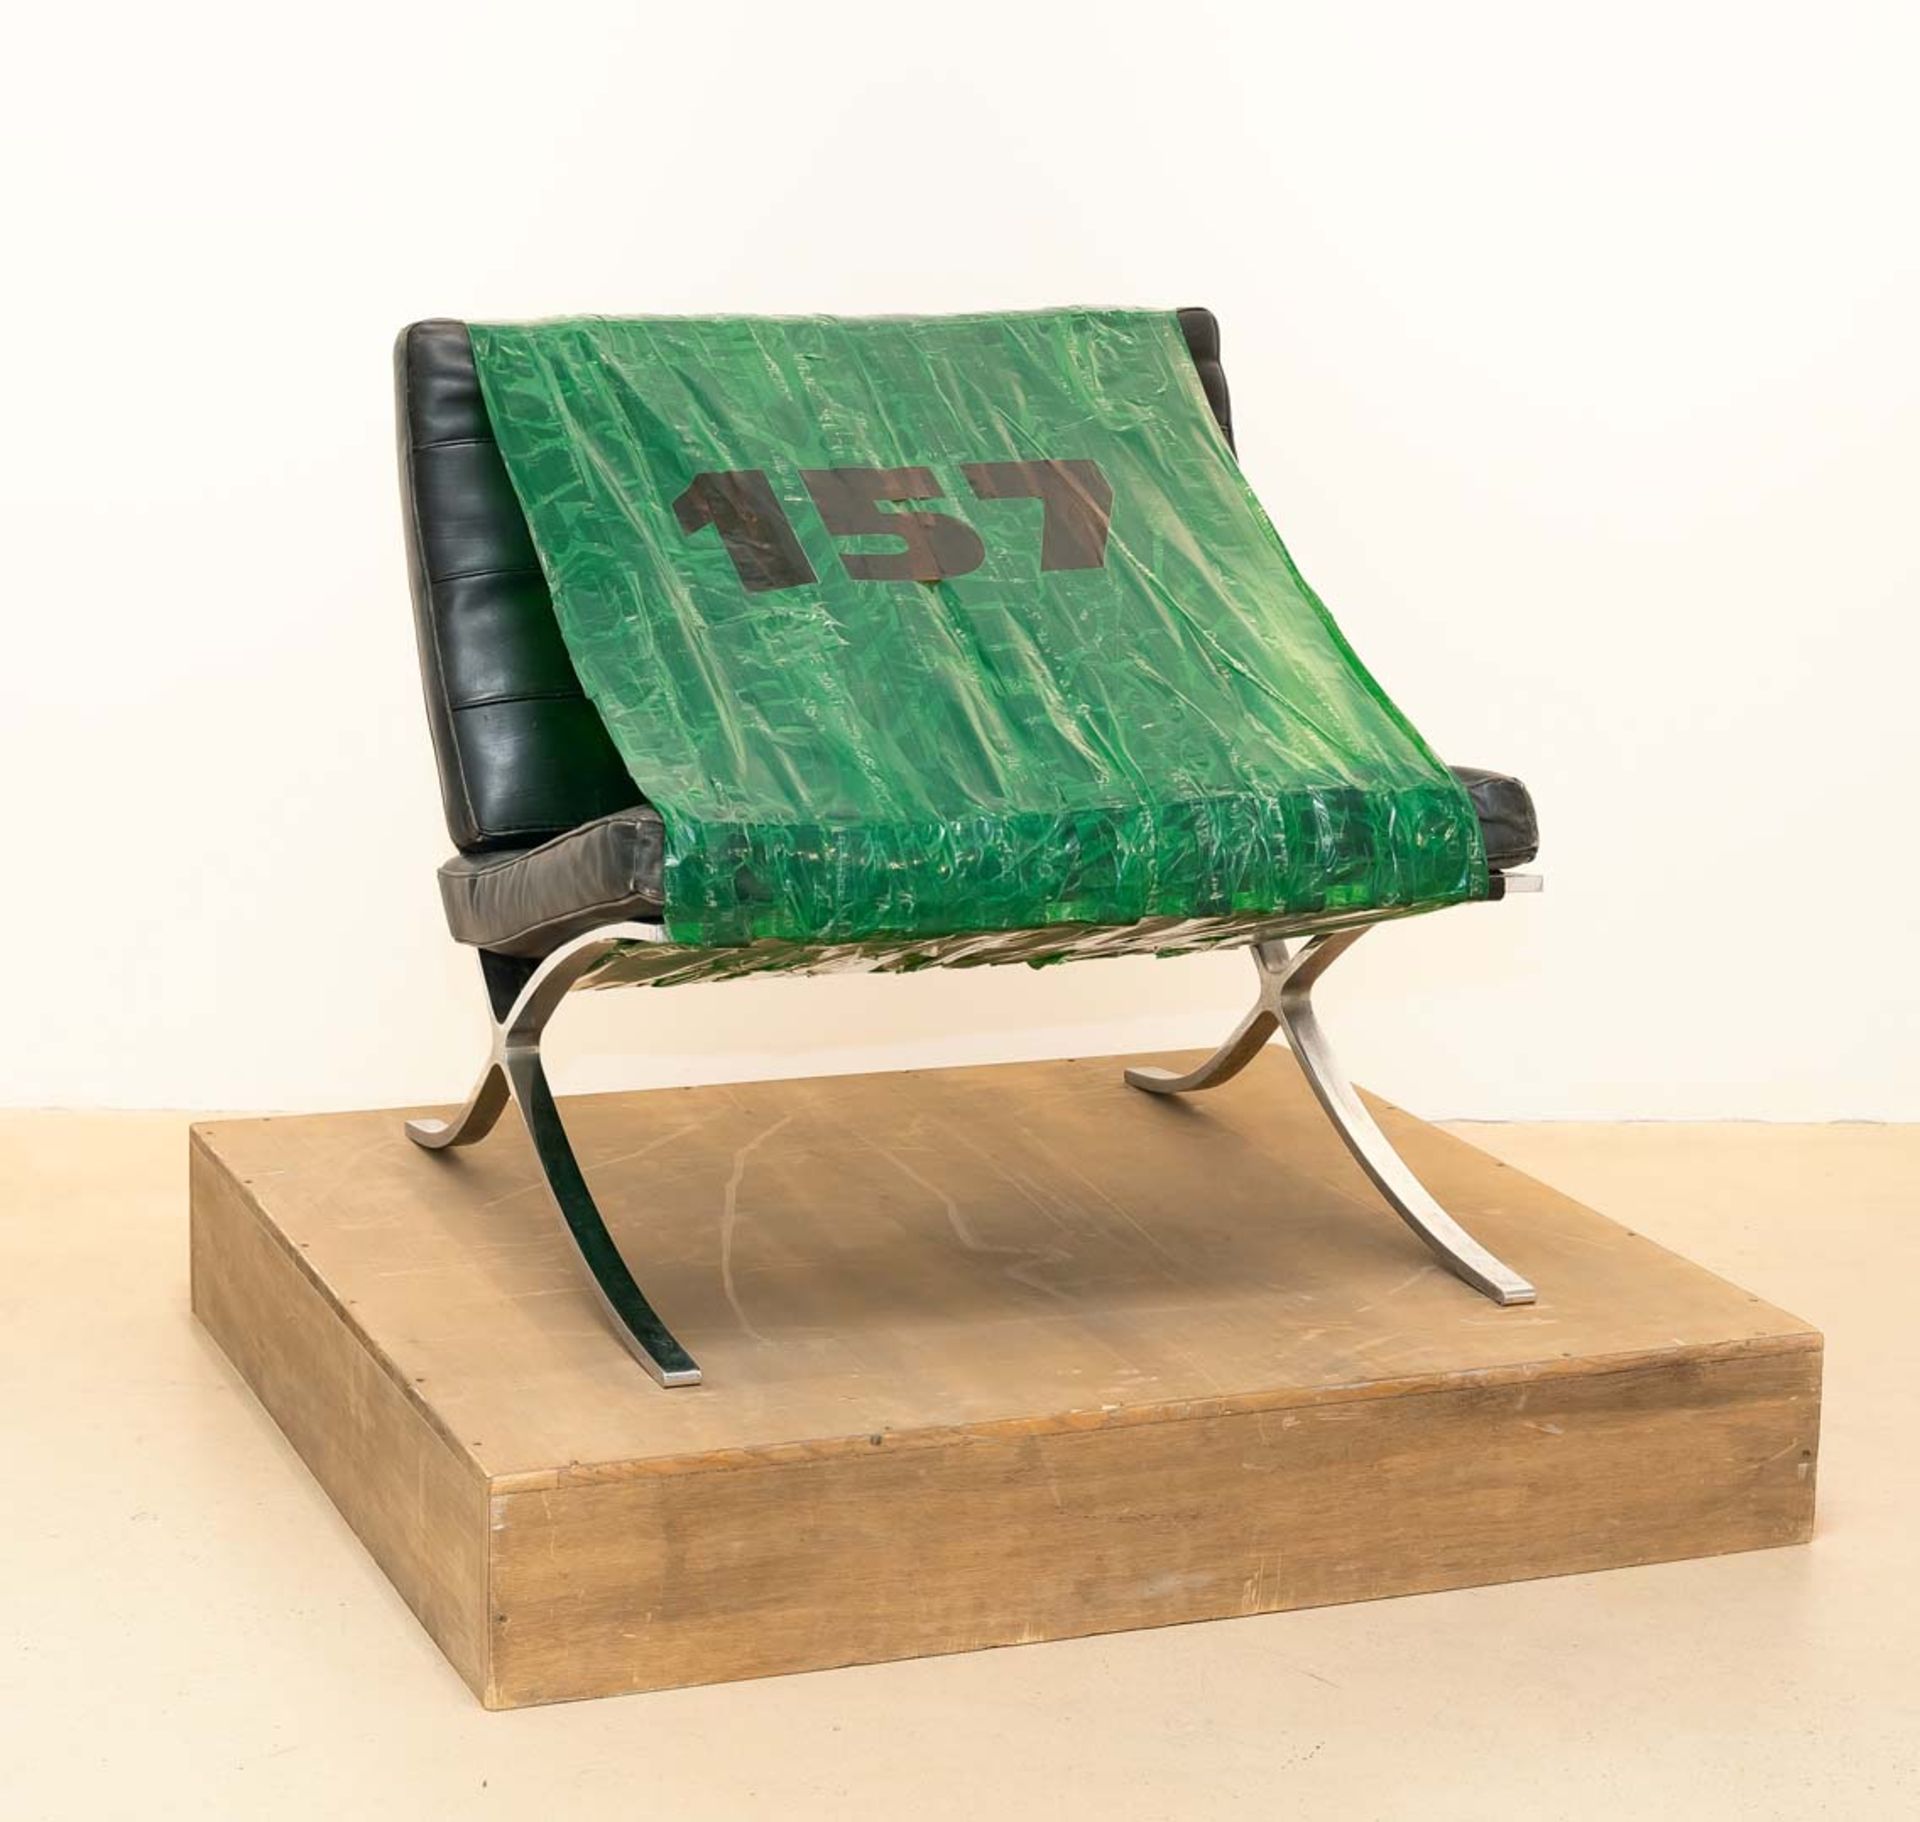 Martin Kippenberger, Untitled (157).Barcelona chair, sticky tape, foil script on wooden plinth. (